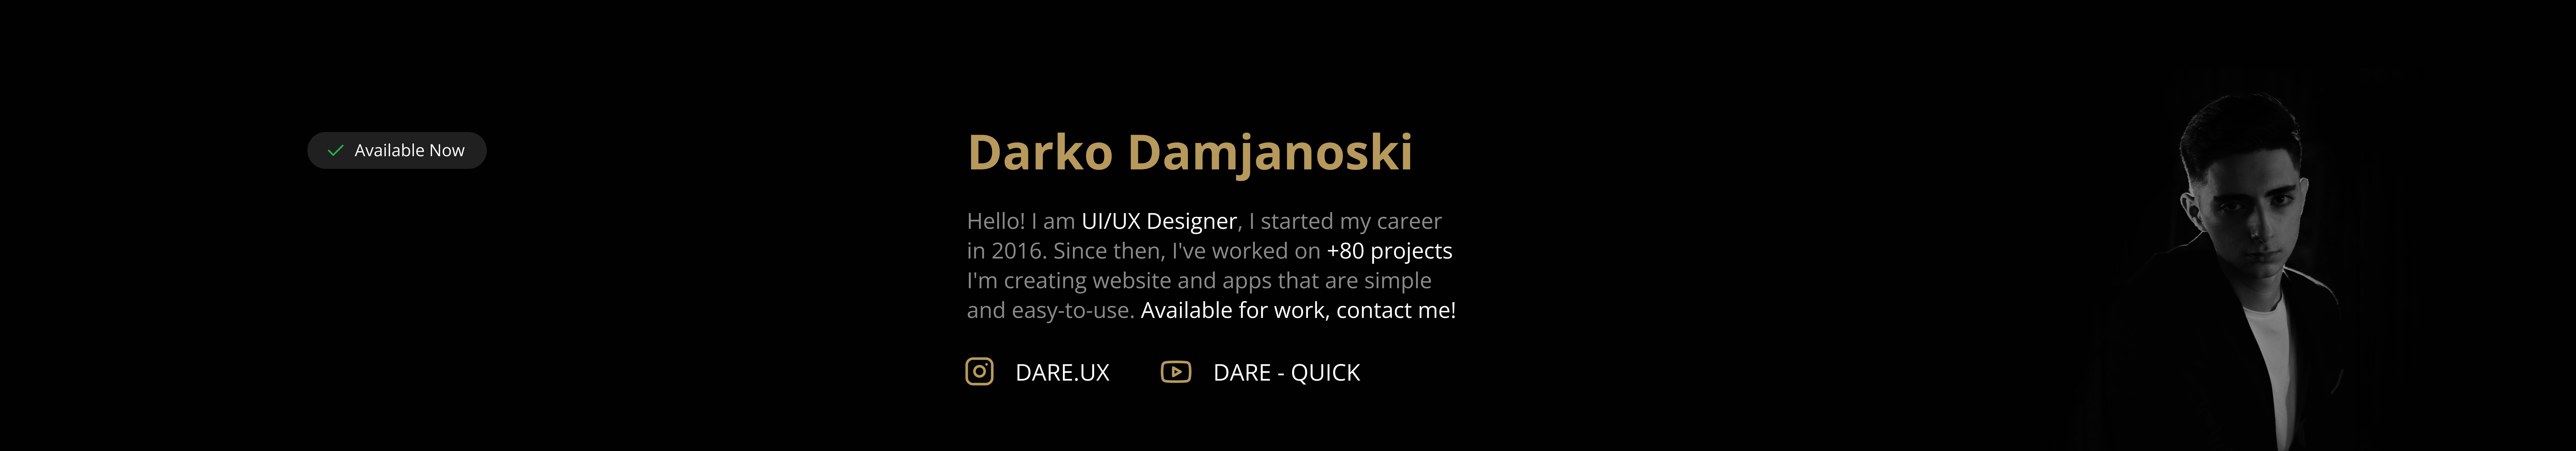 Profil-Banner von Darko Damjanoski